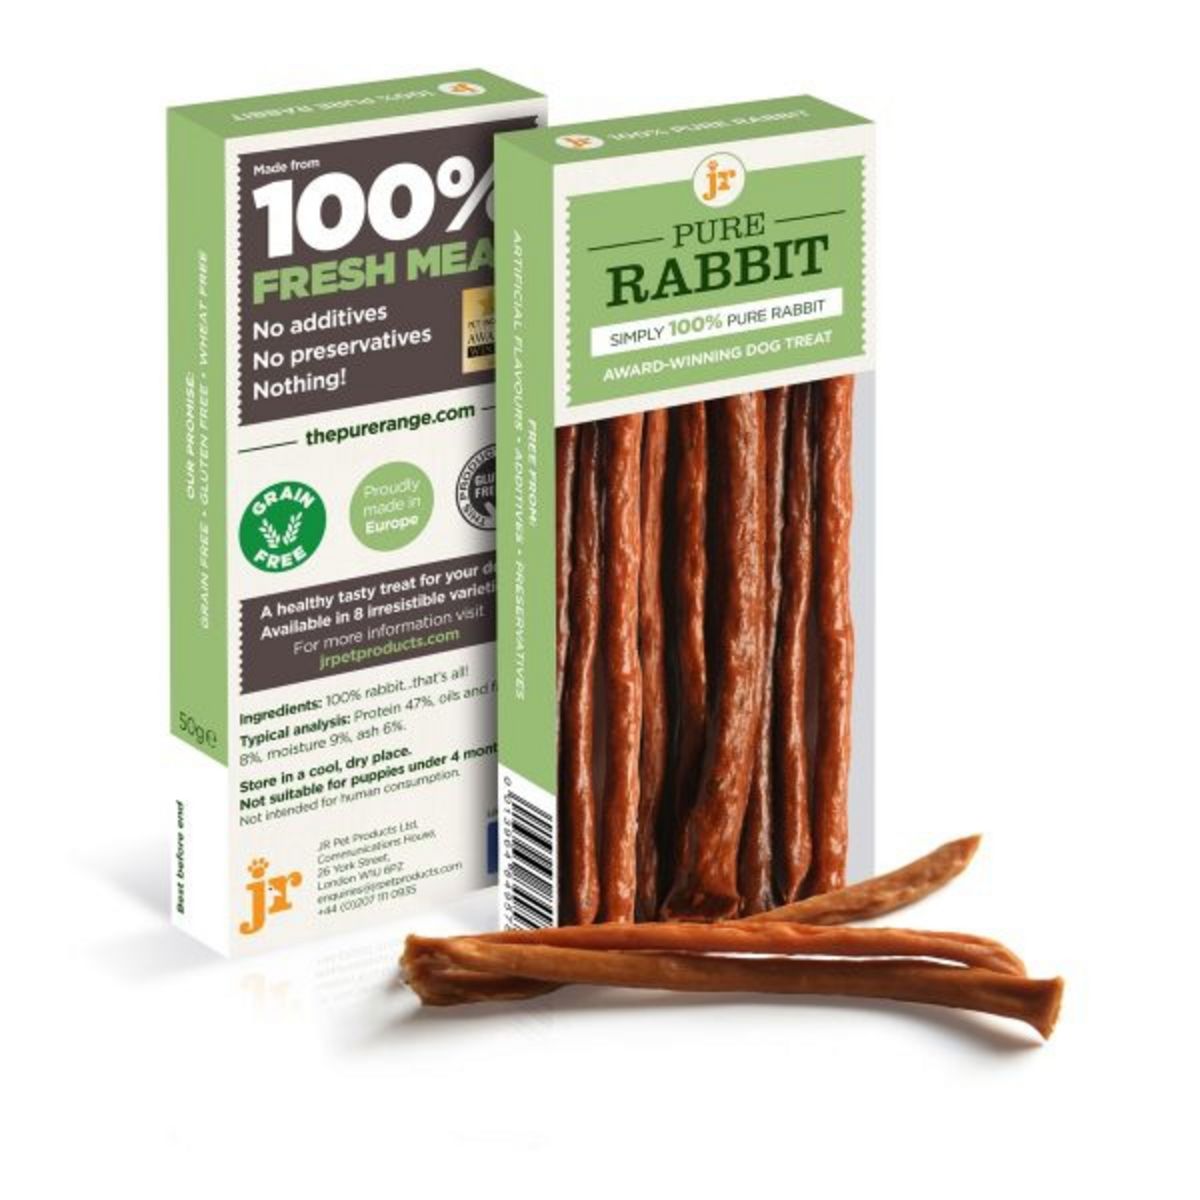 JR Pet Products - Pure Rabbit Sticks